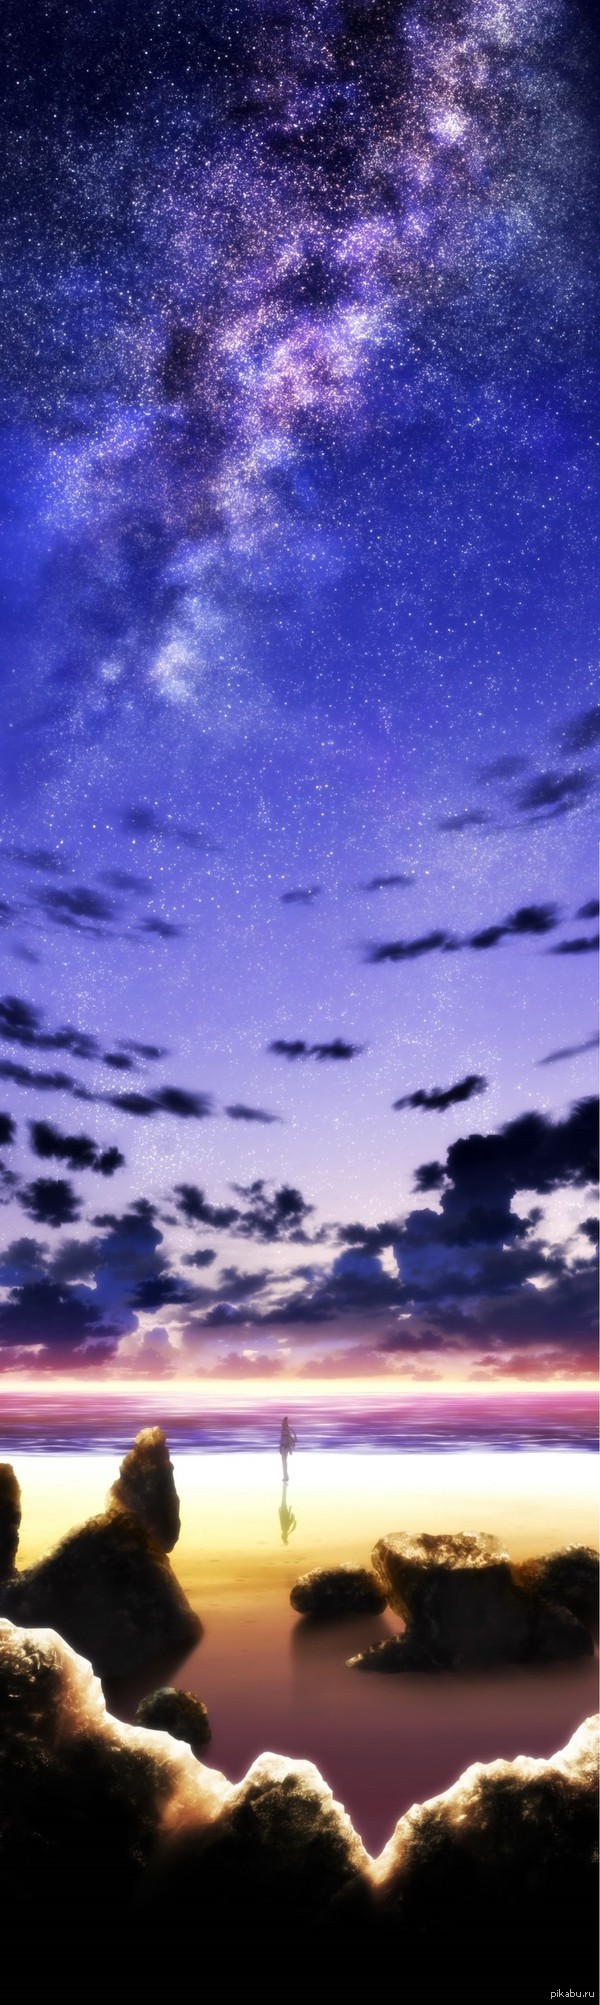 Nisekoi Sky #AnimePikabu